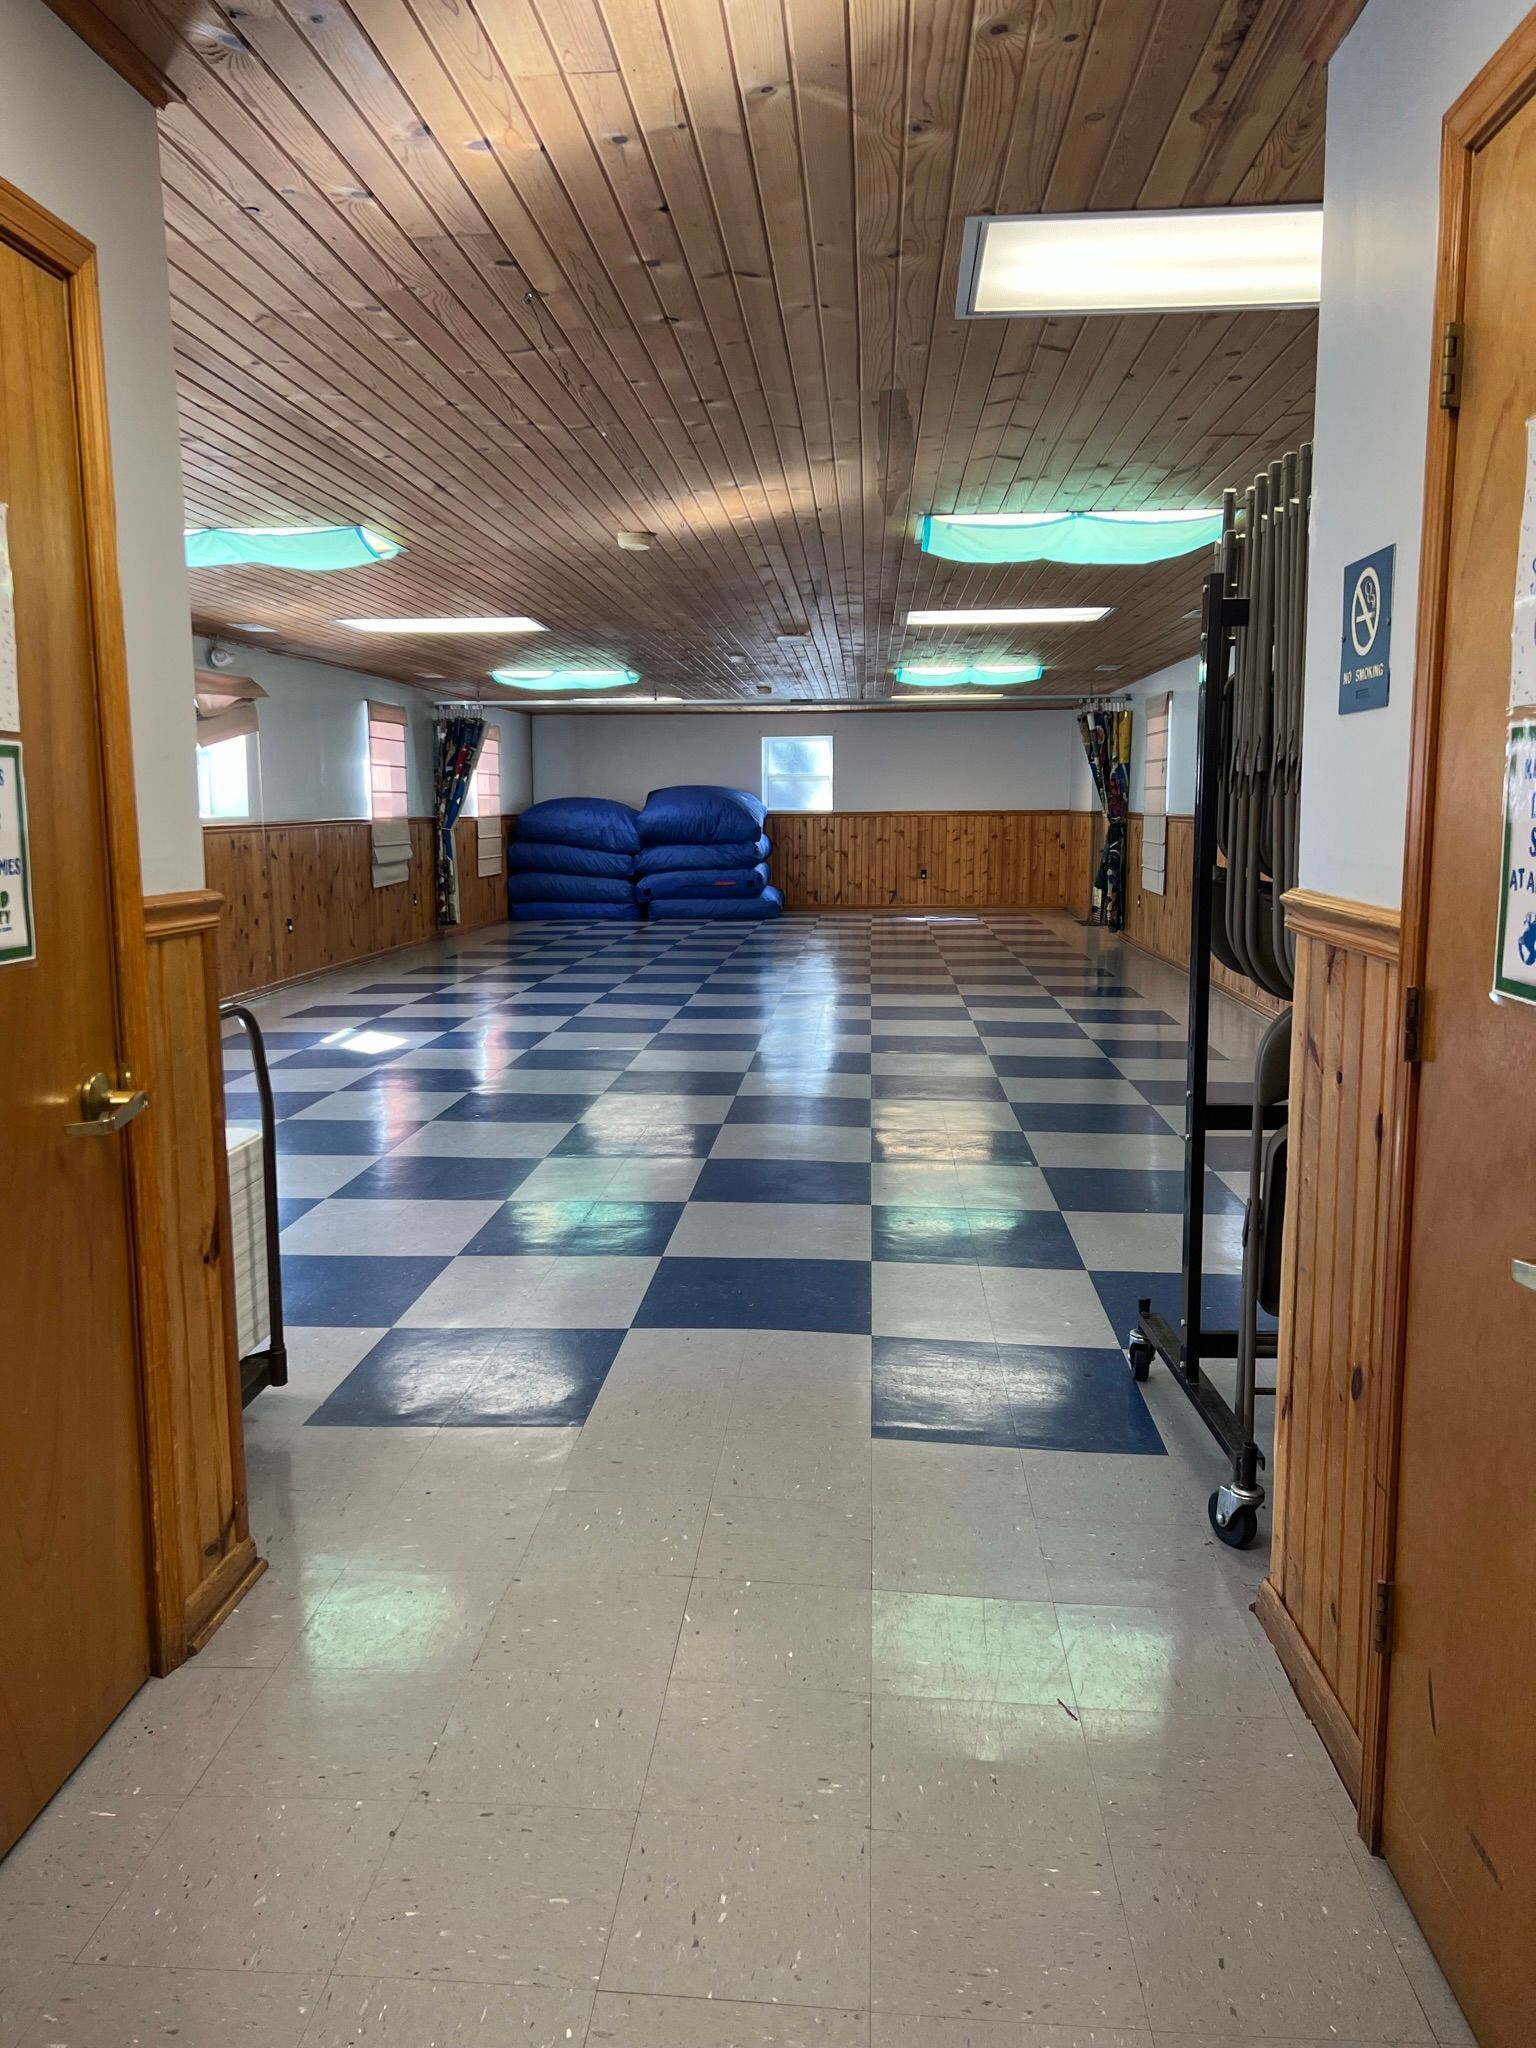 Tile Room inside Allison-Jukebox Community Center.